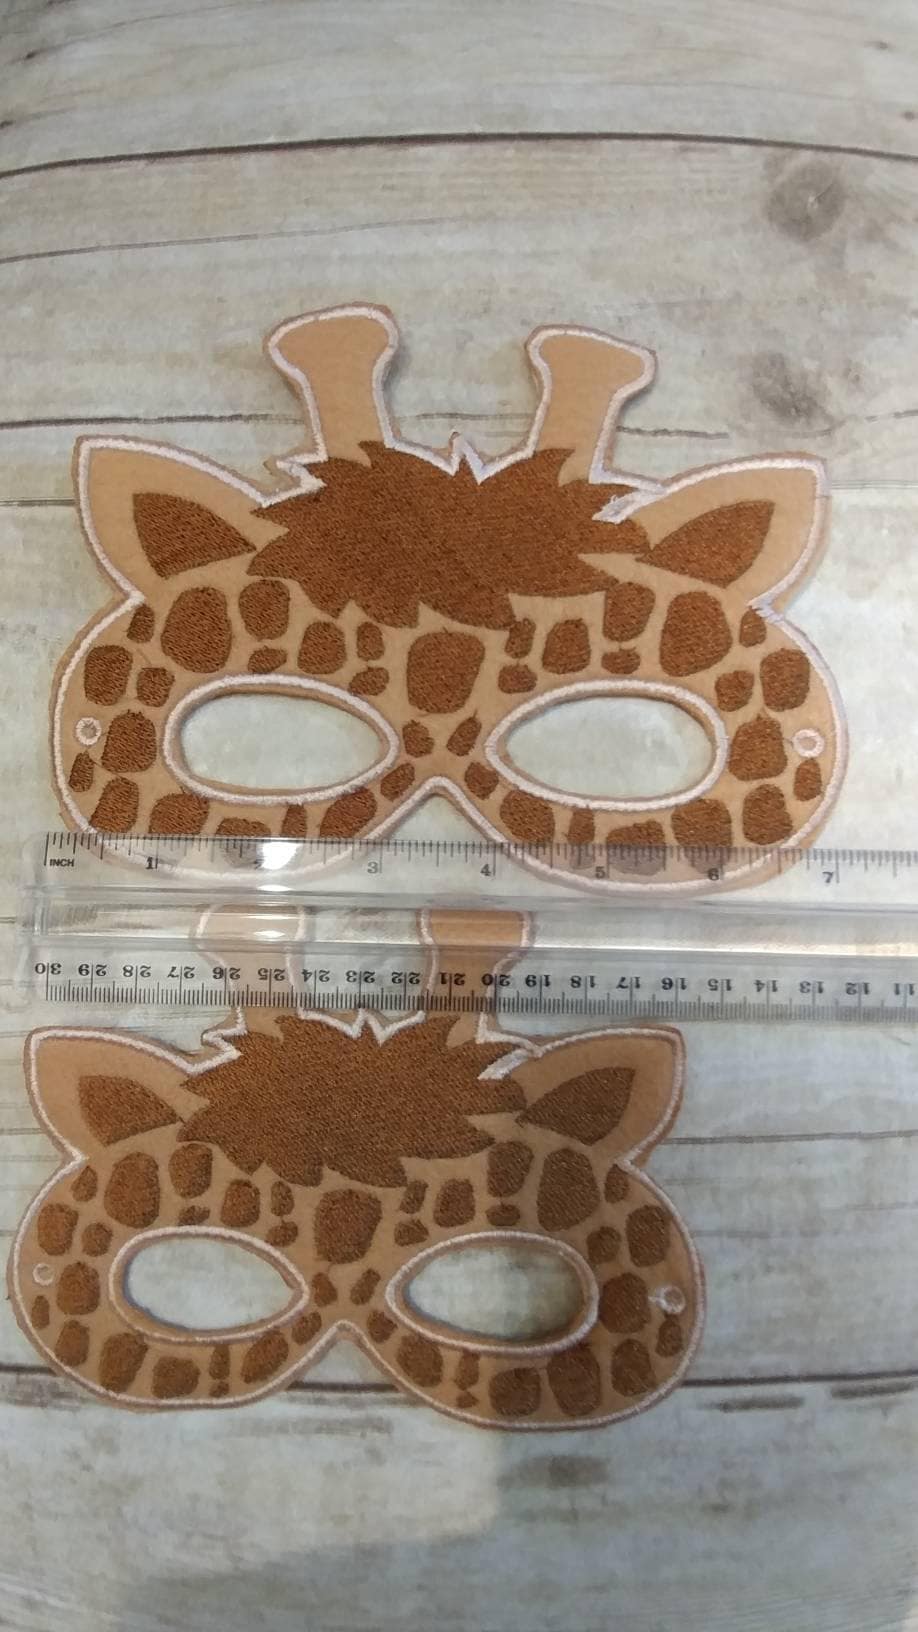 Handcrafted Pretend play felt giraffe mask for kids